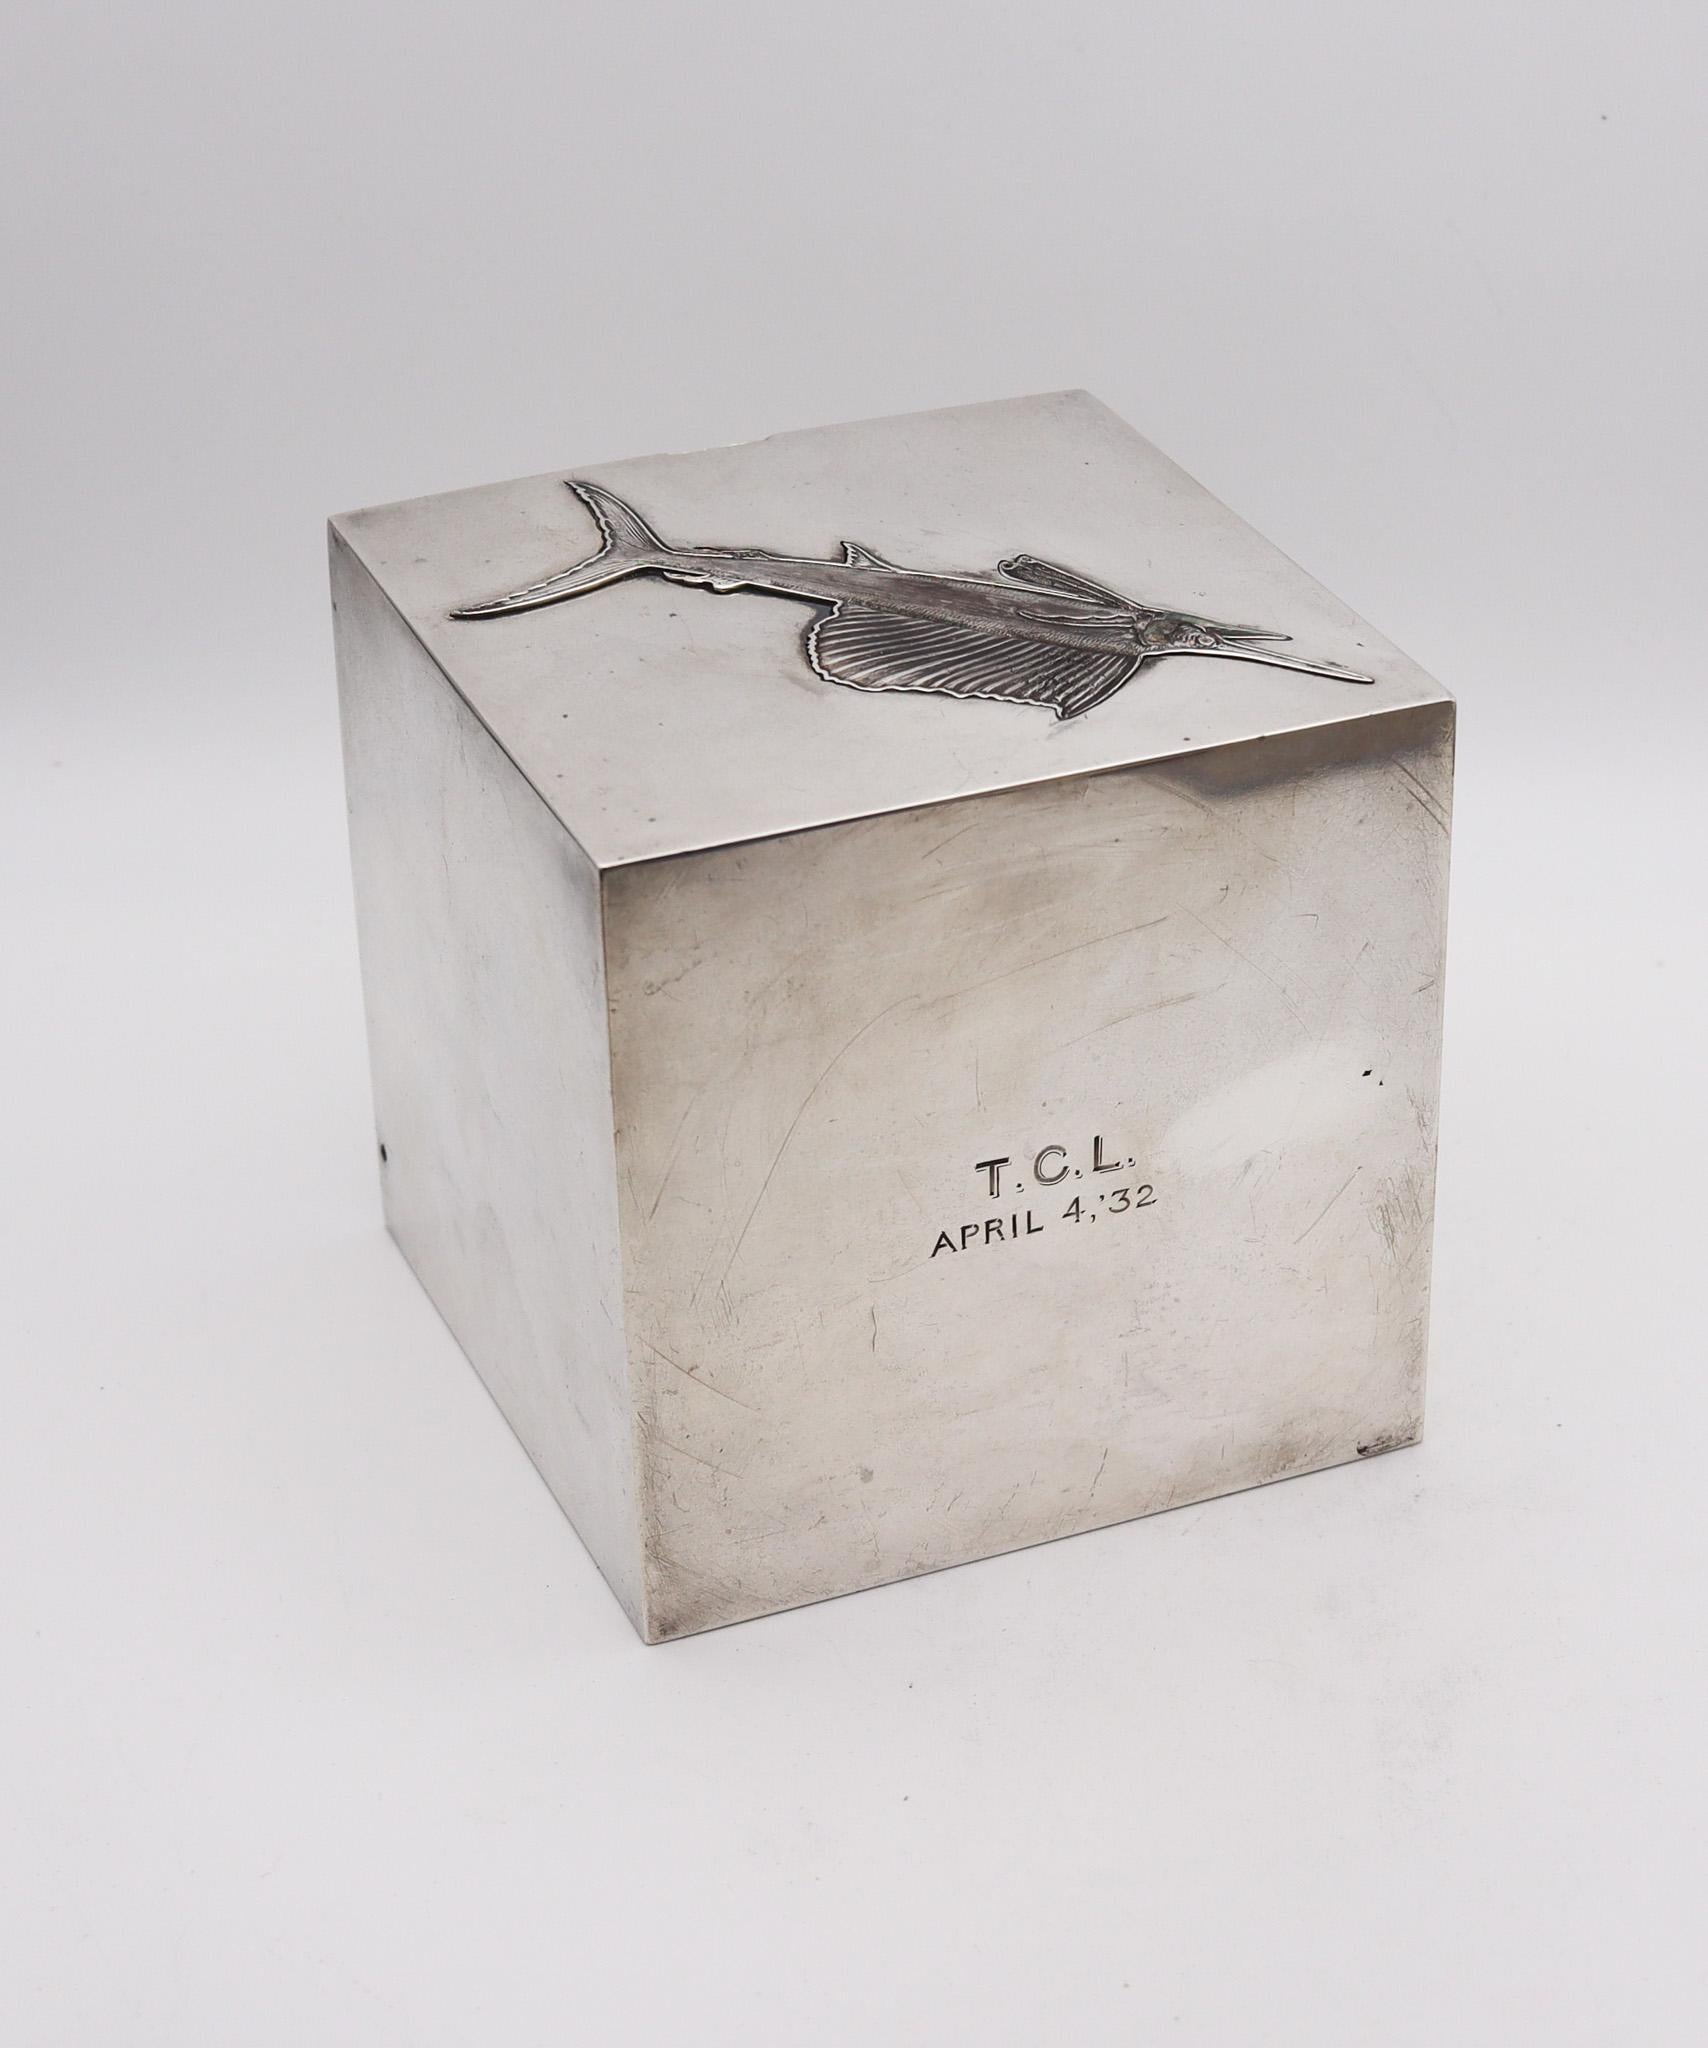 Hand-Crafted Van Cleef & Arpels Paris 1932 Art Deco Mechanical Desk Clock Box Sterling Silver For Sale